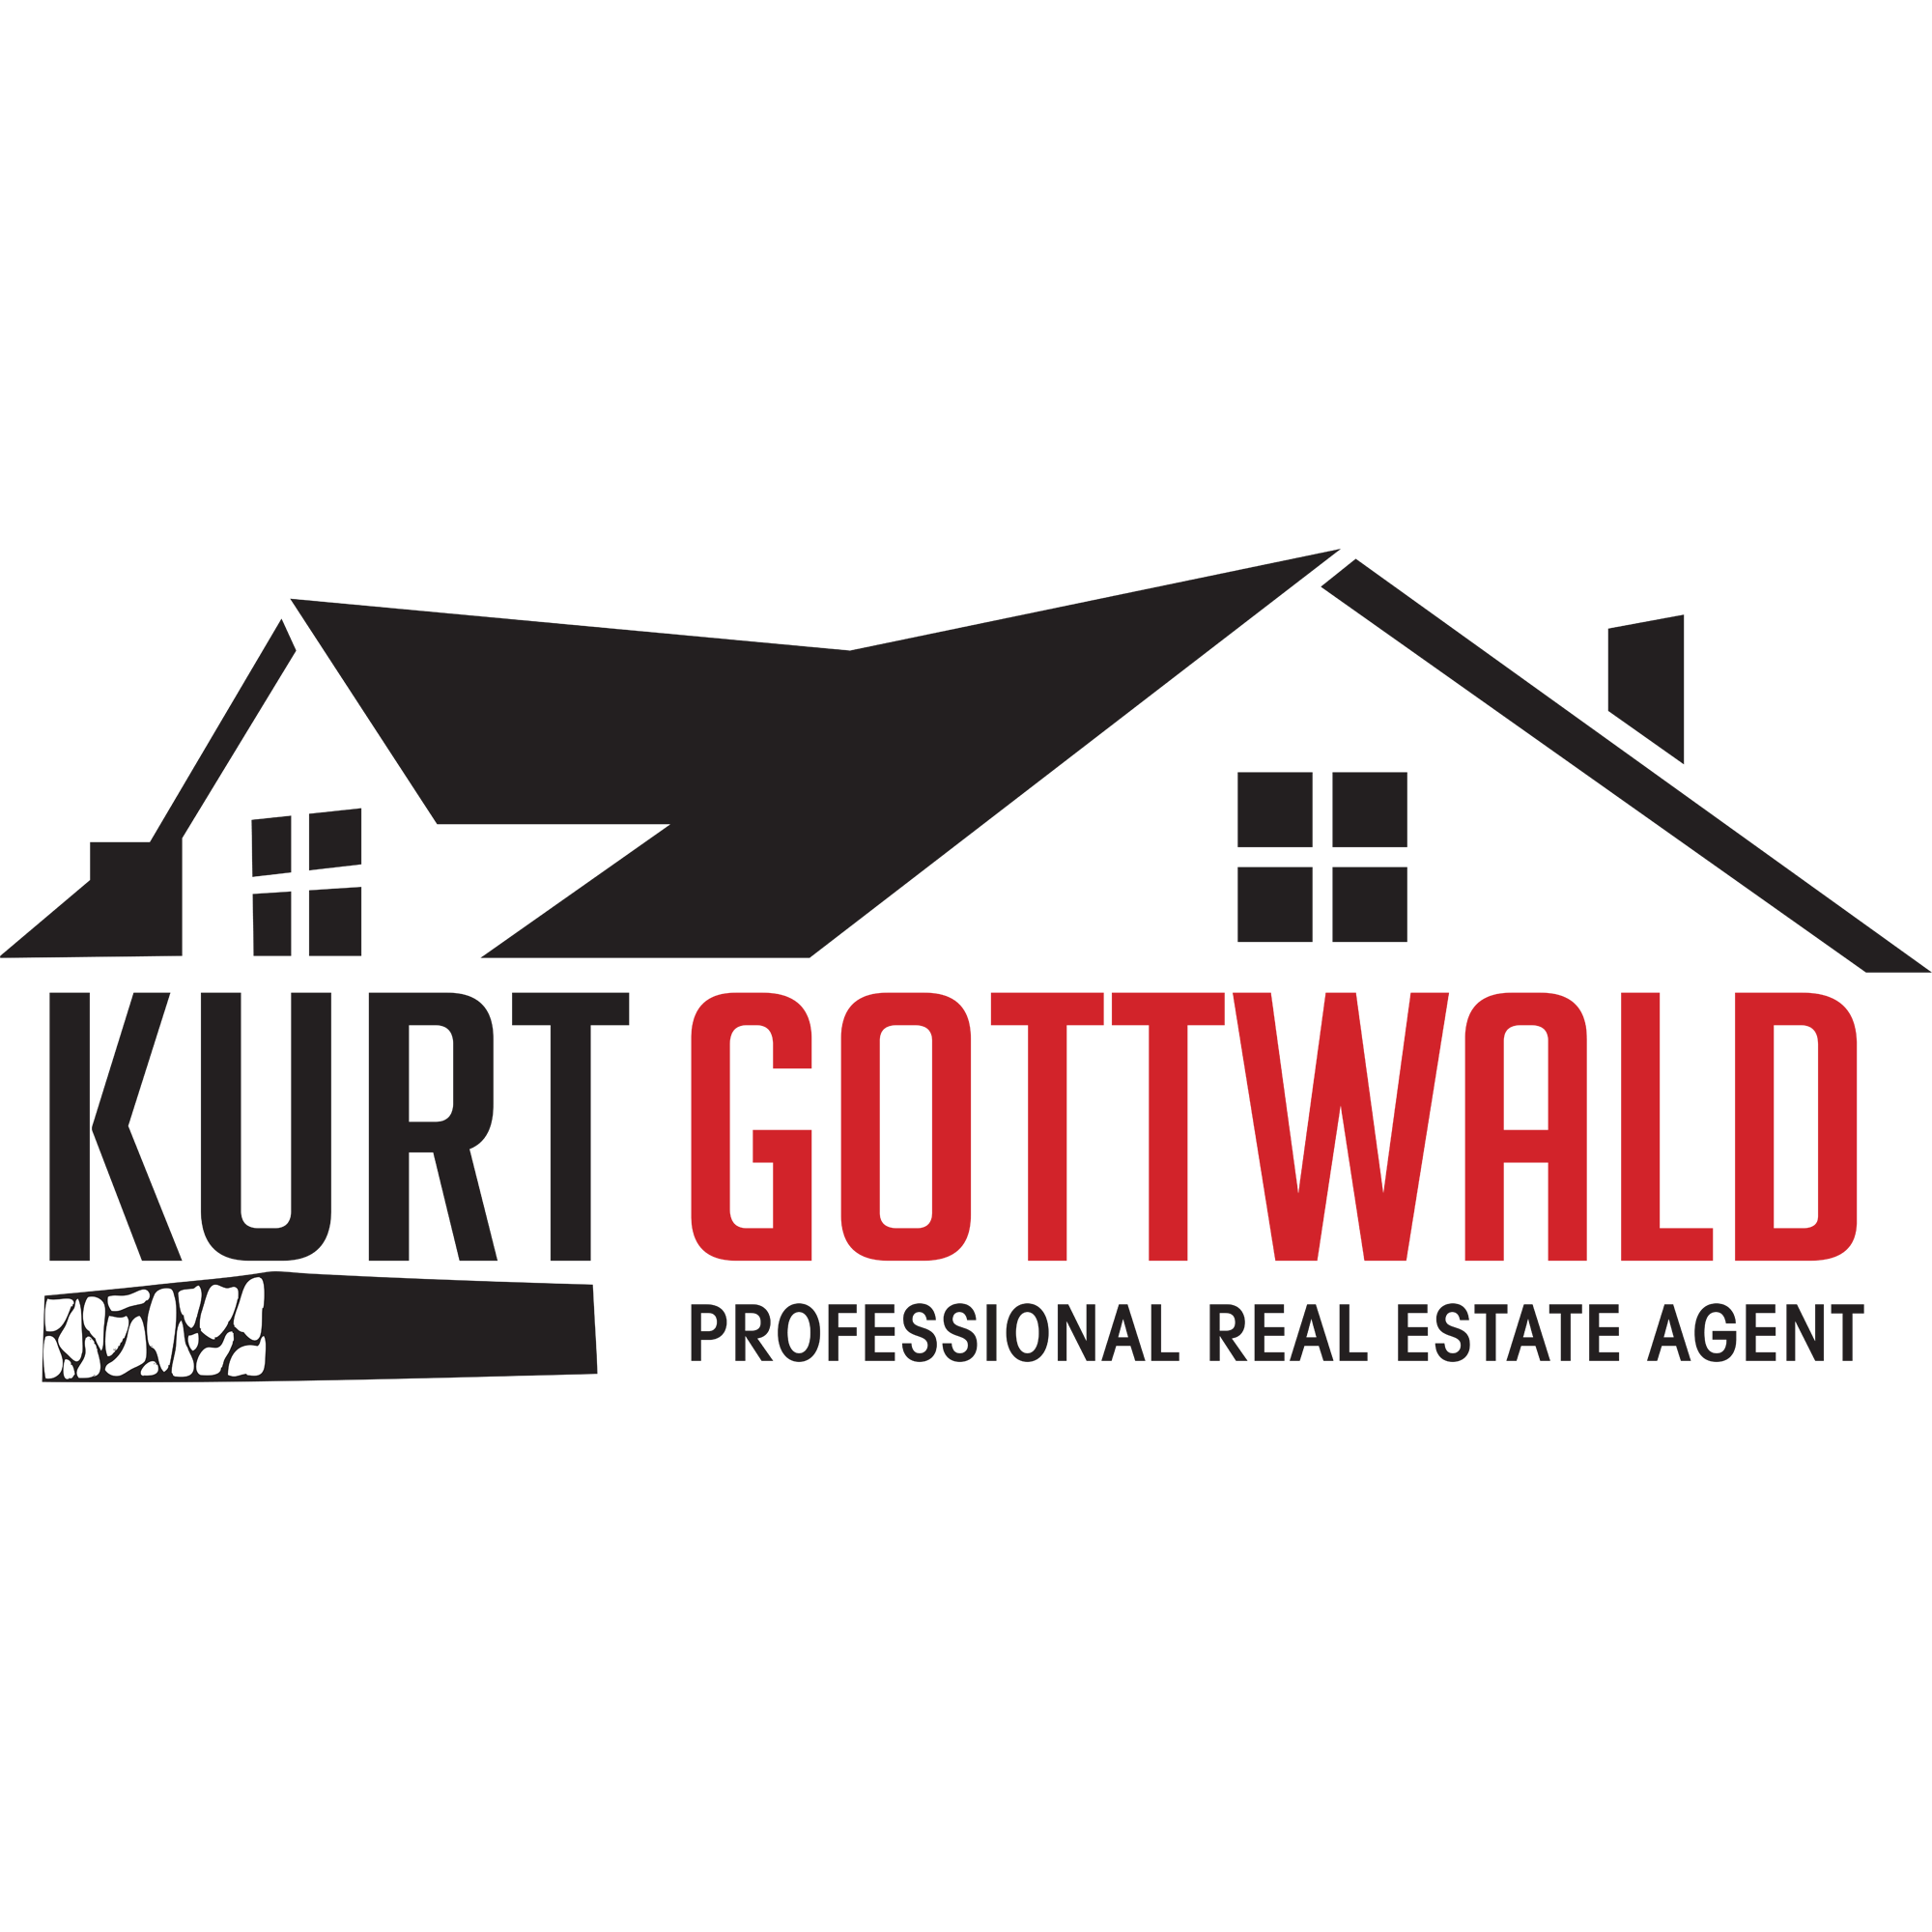 Kurt Gottwald - Professional Real Estate Agent Logo